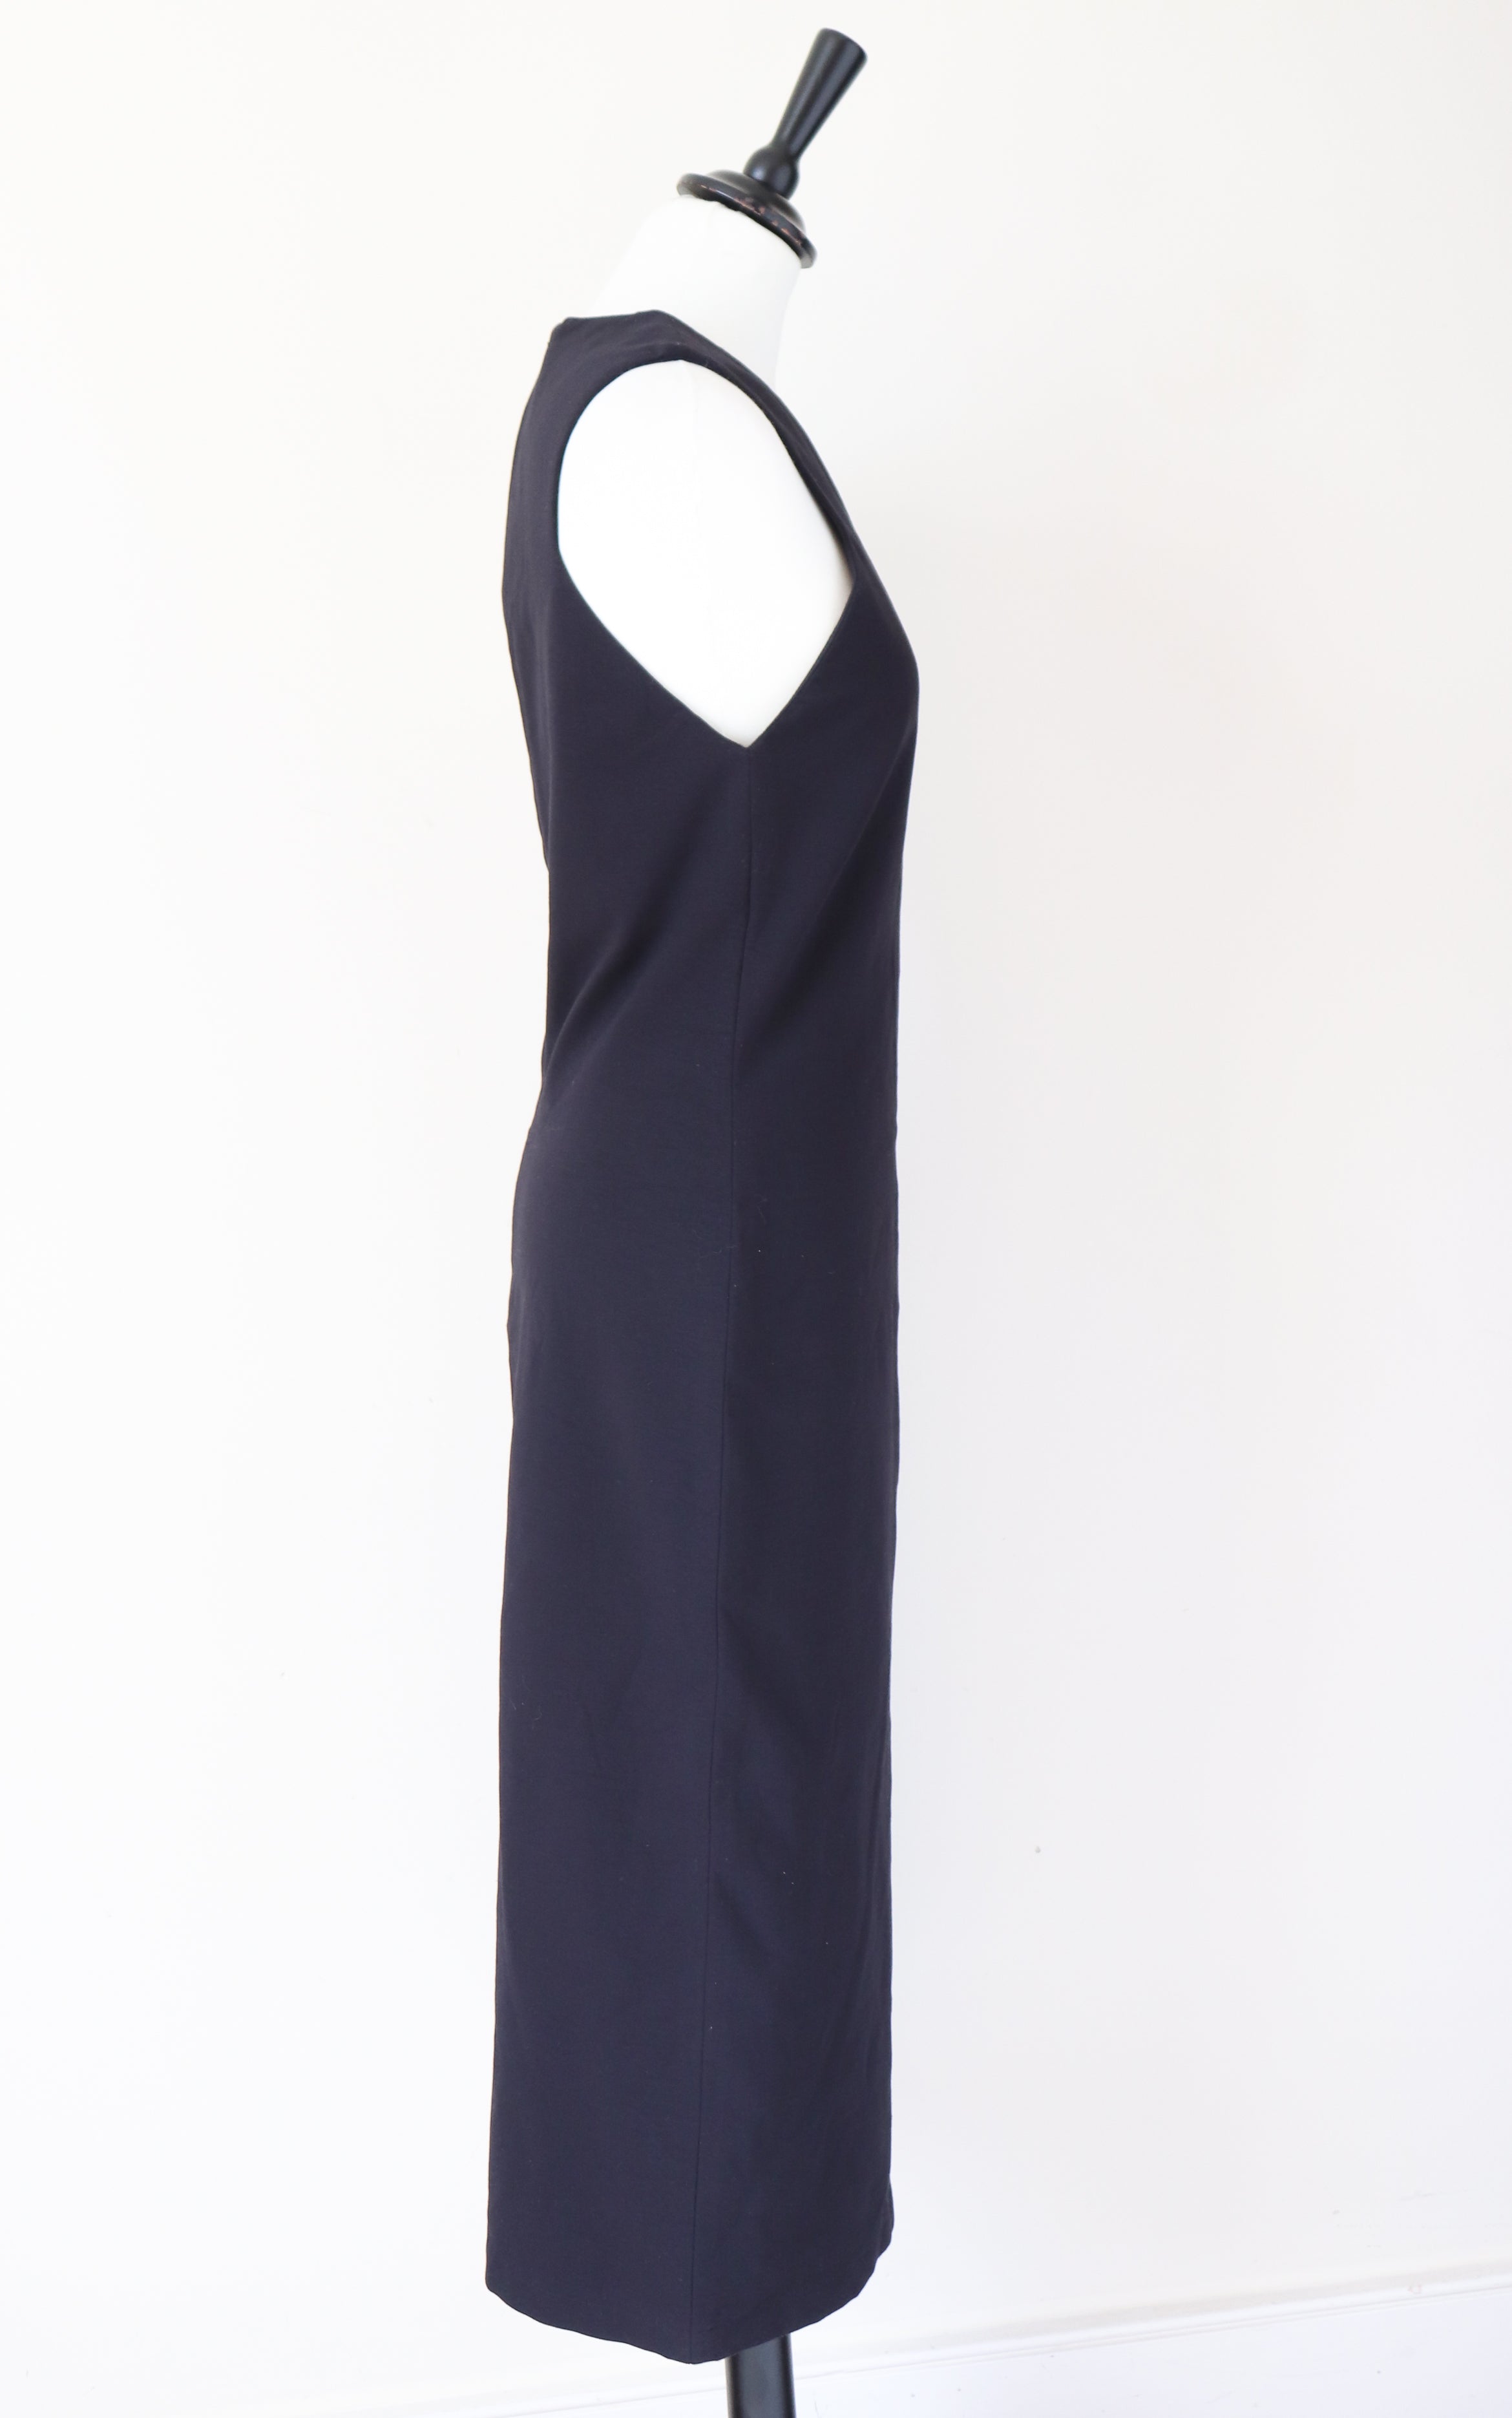 The Row Black Dress - Midi Sleeveless Sheath Body Con LBD -  Label L - Fit S / UK 10